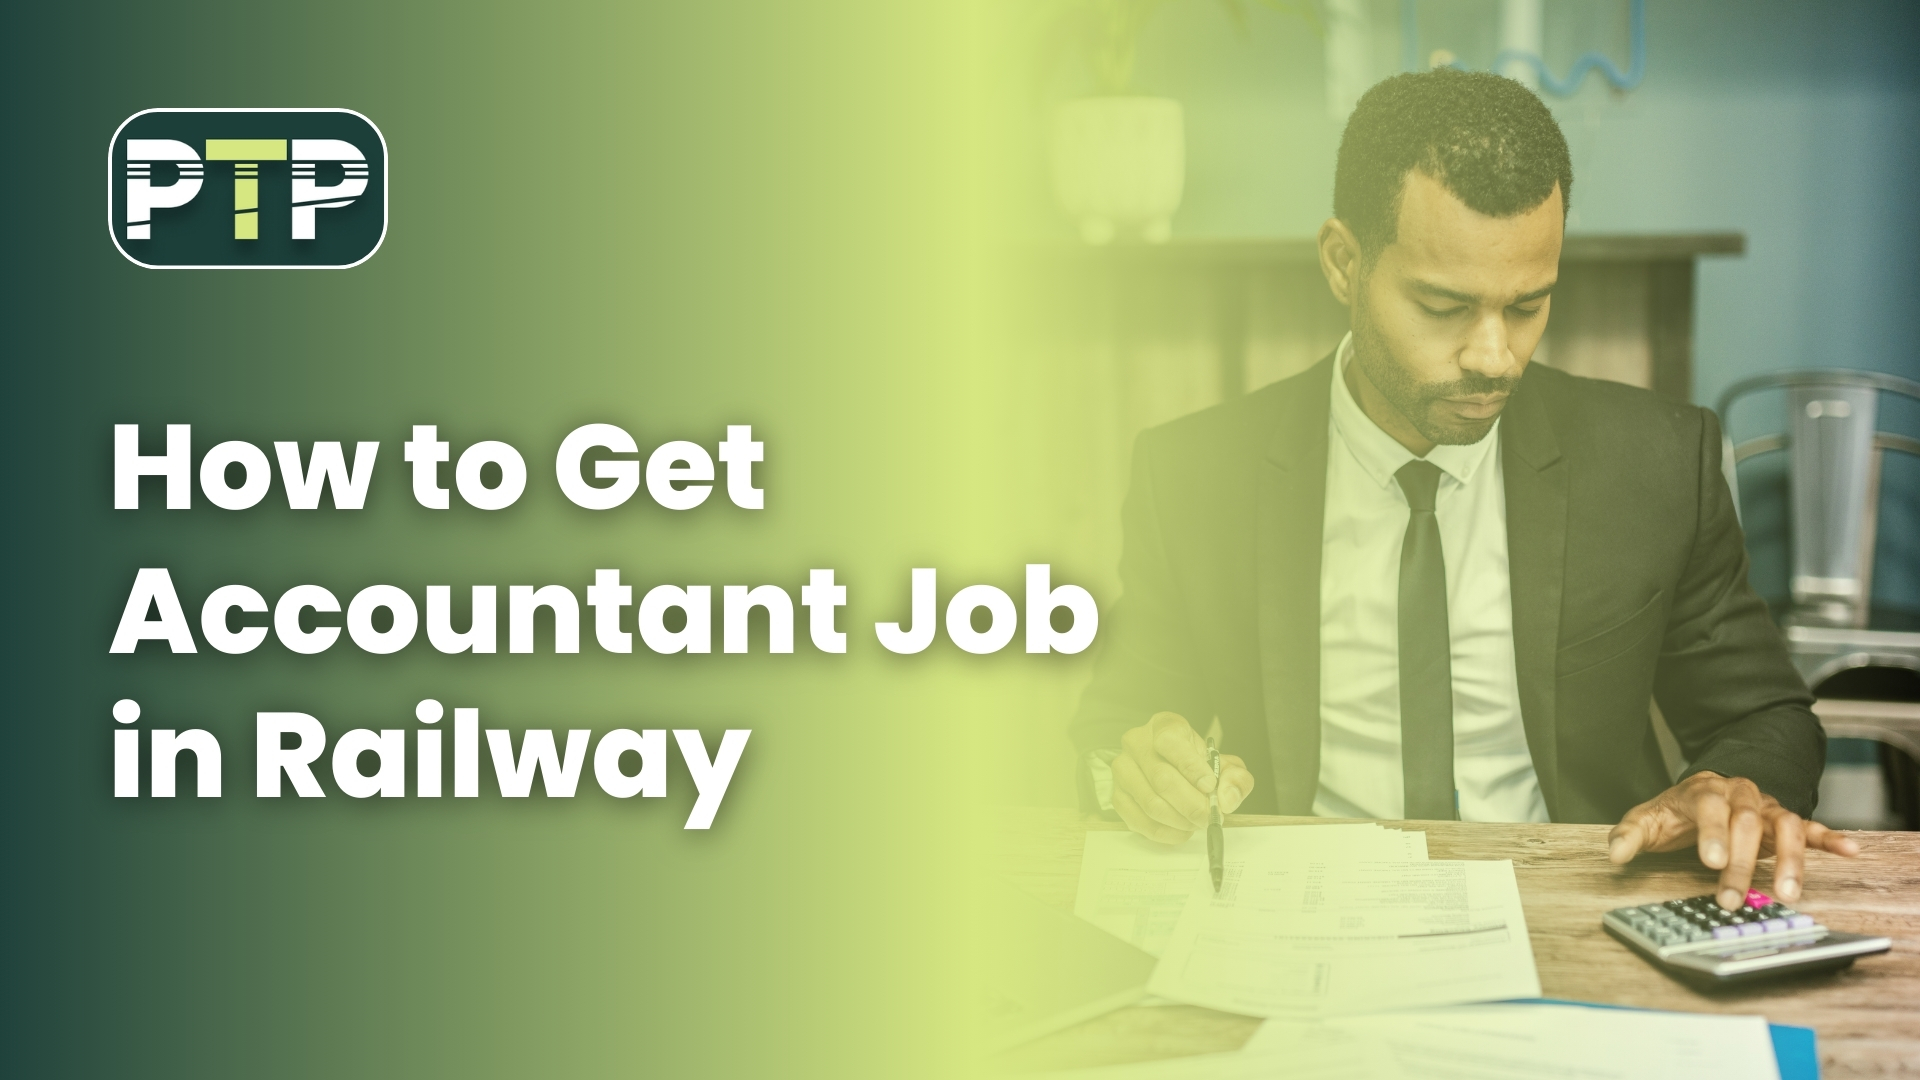 Railroad Accountant Jobs | Find Accountant Job in Railway